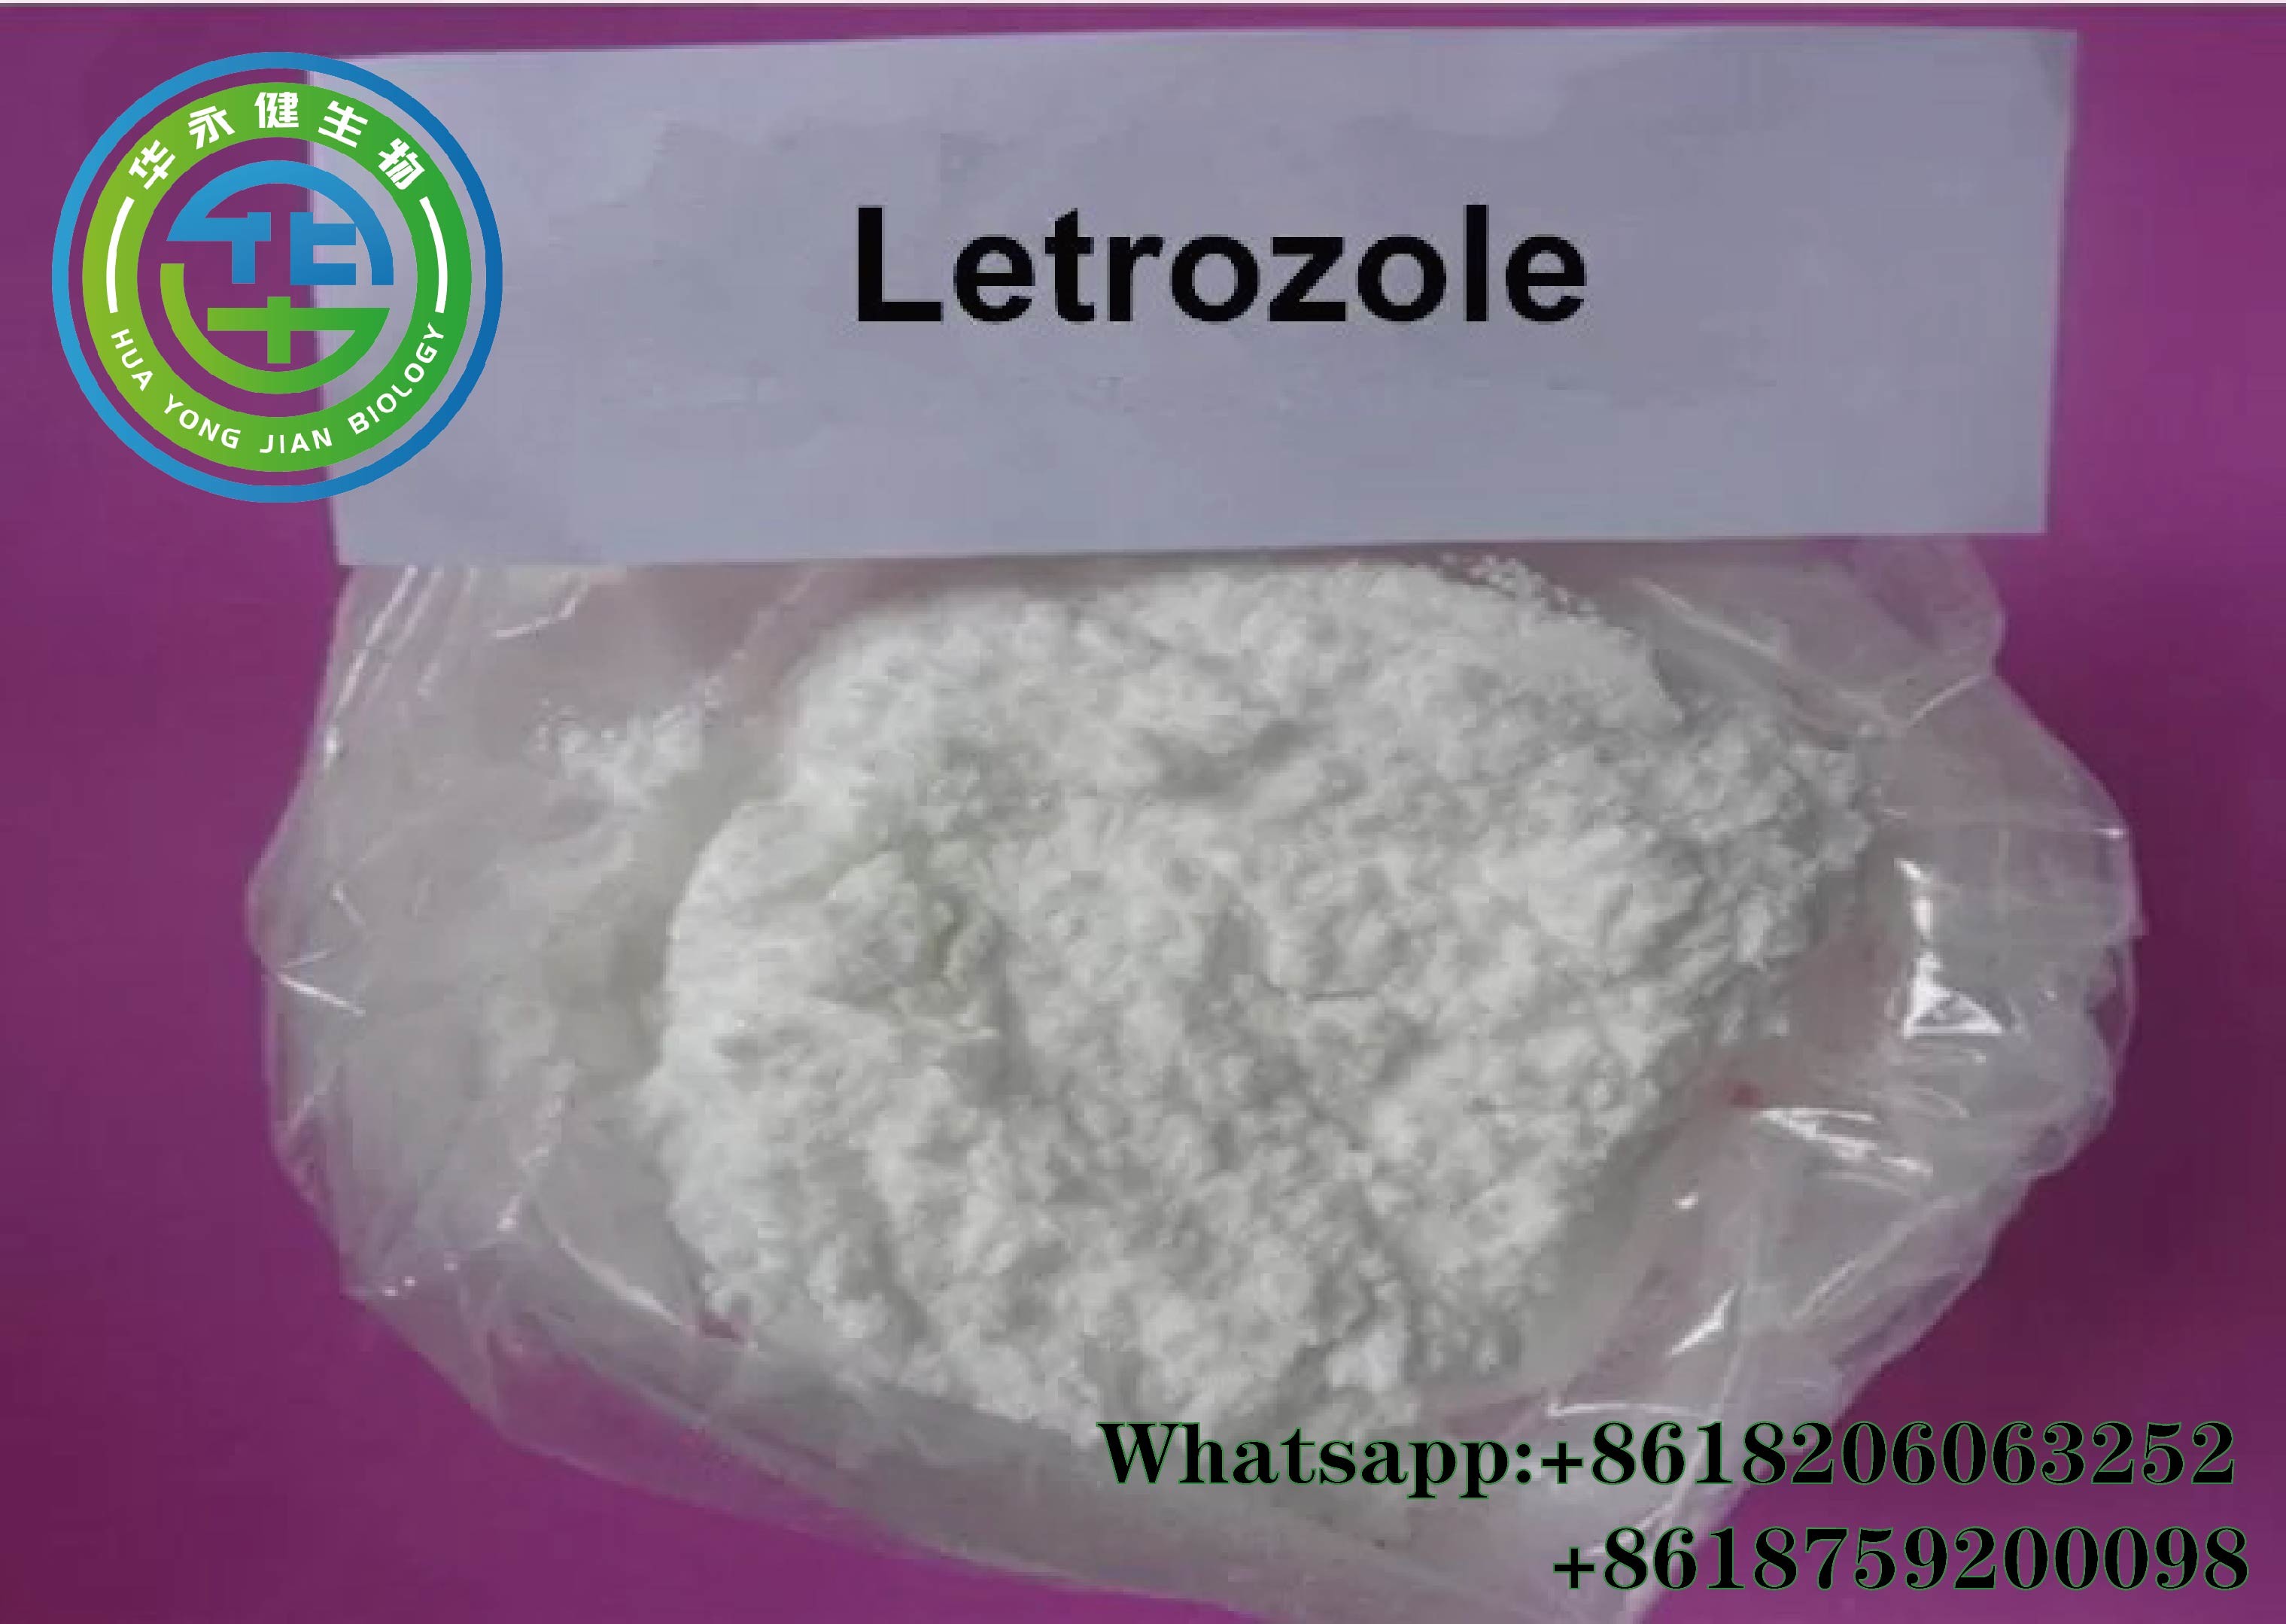 Wholesale 99% Purity Femara Letrozole Anti Estrogen Steroids  CAS NO 112809-51-5 from china suppliers